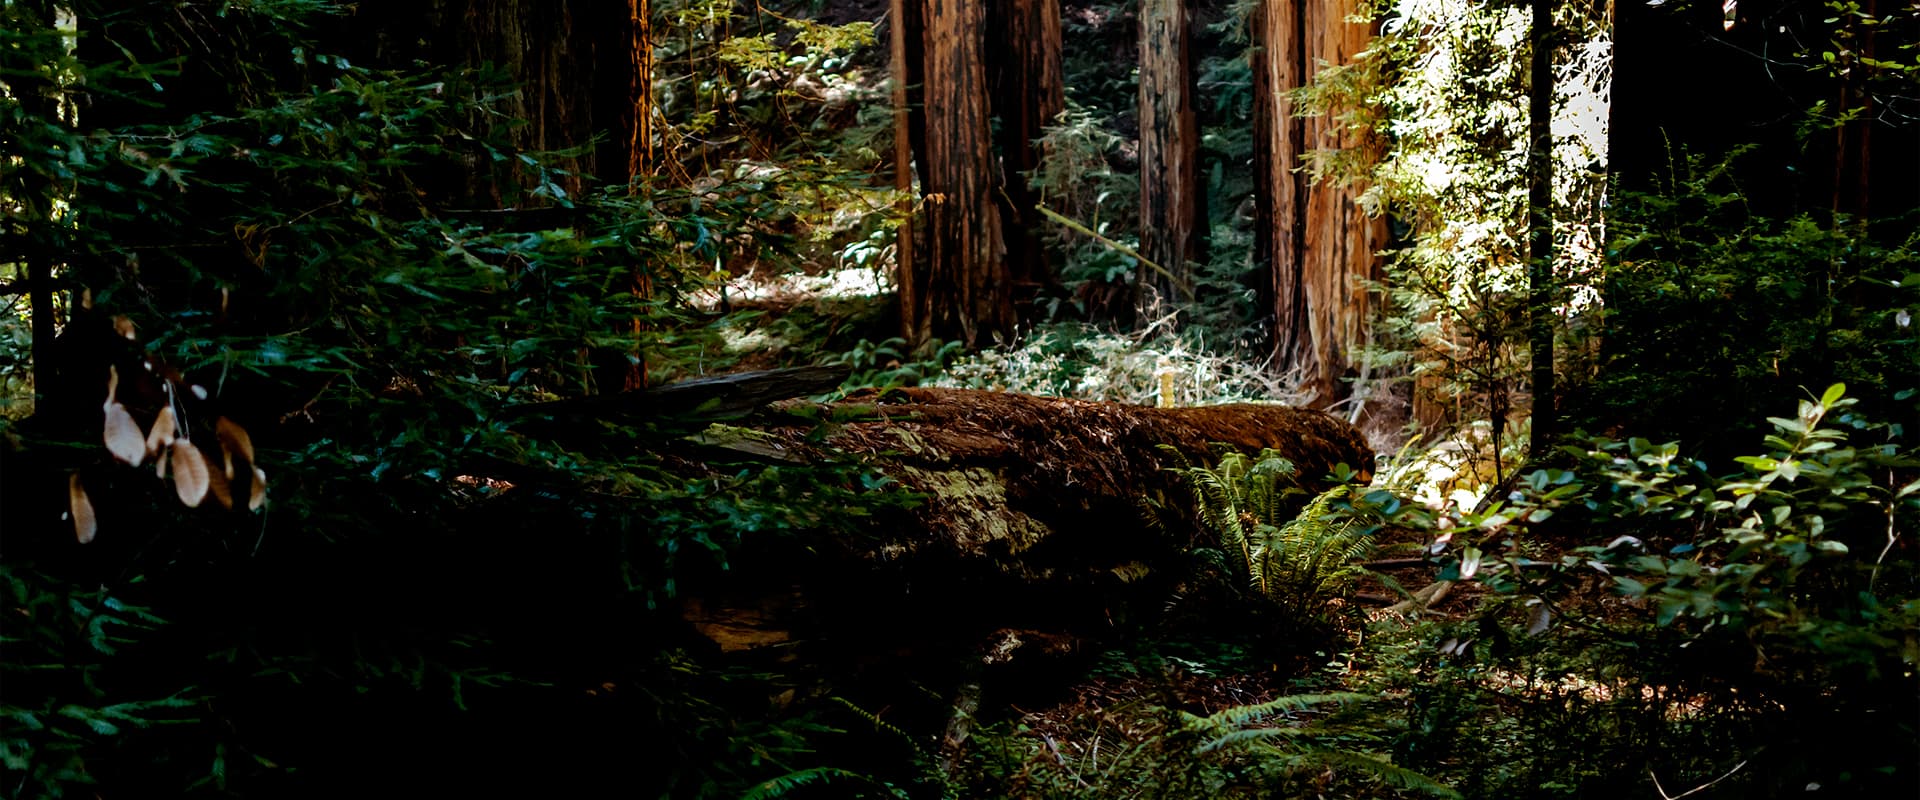 Muir Woods National Monument, California (2013)